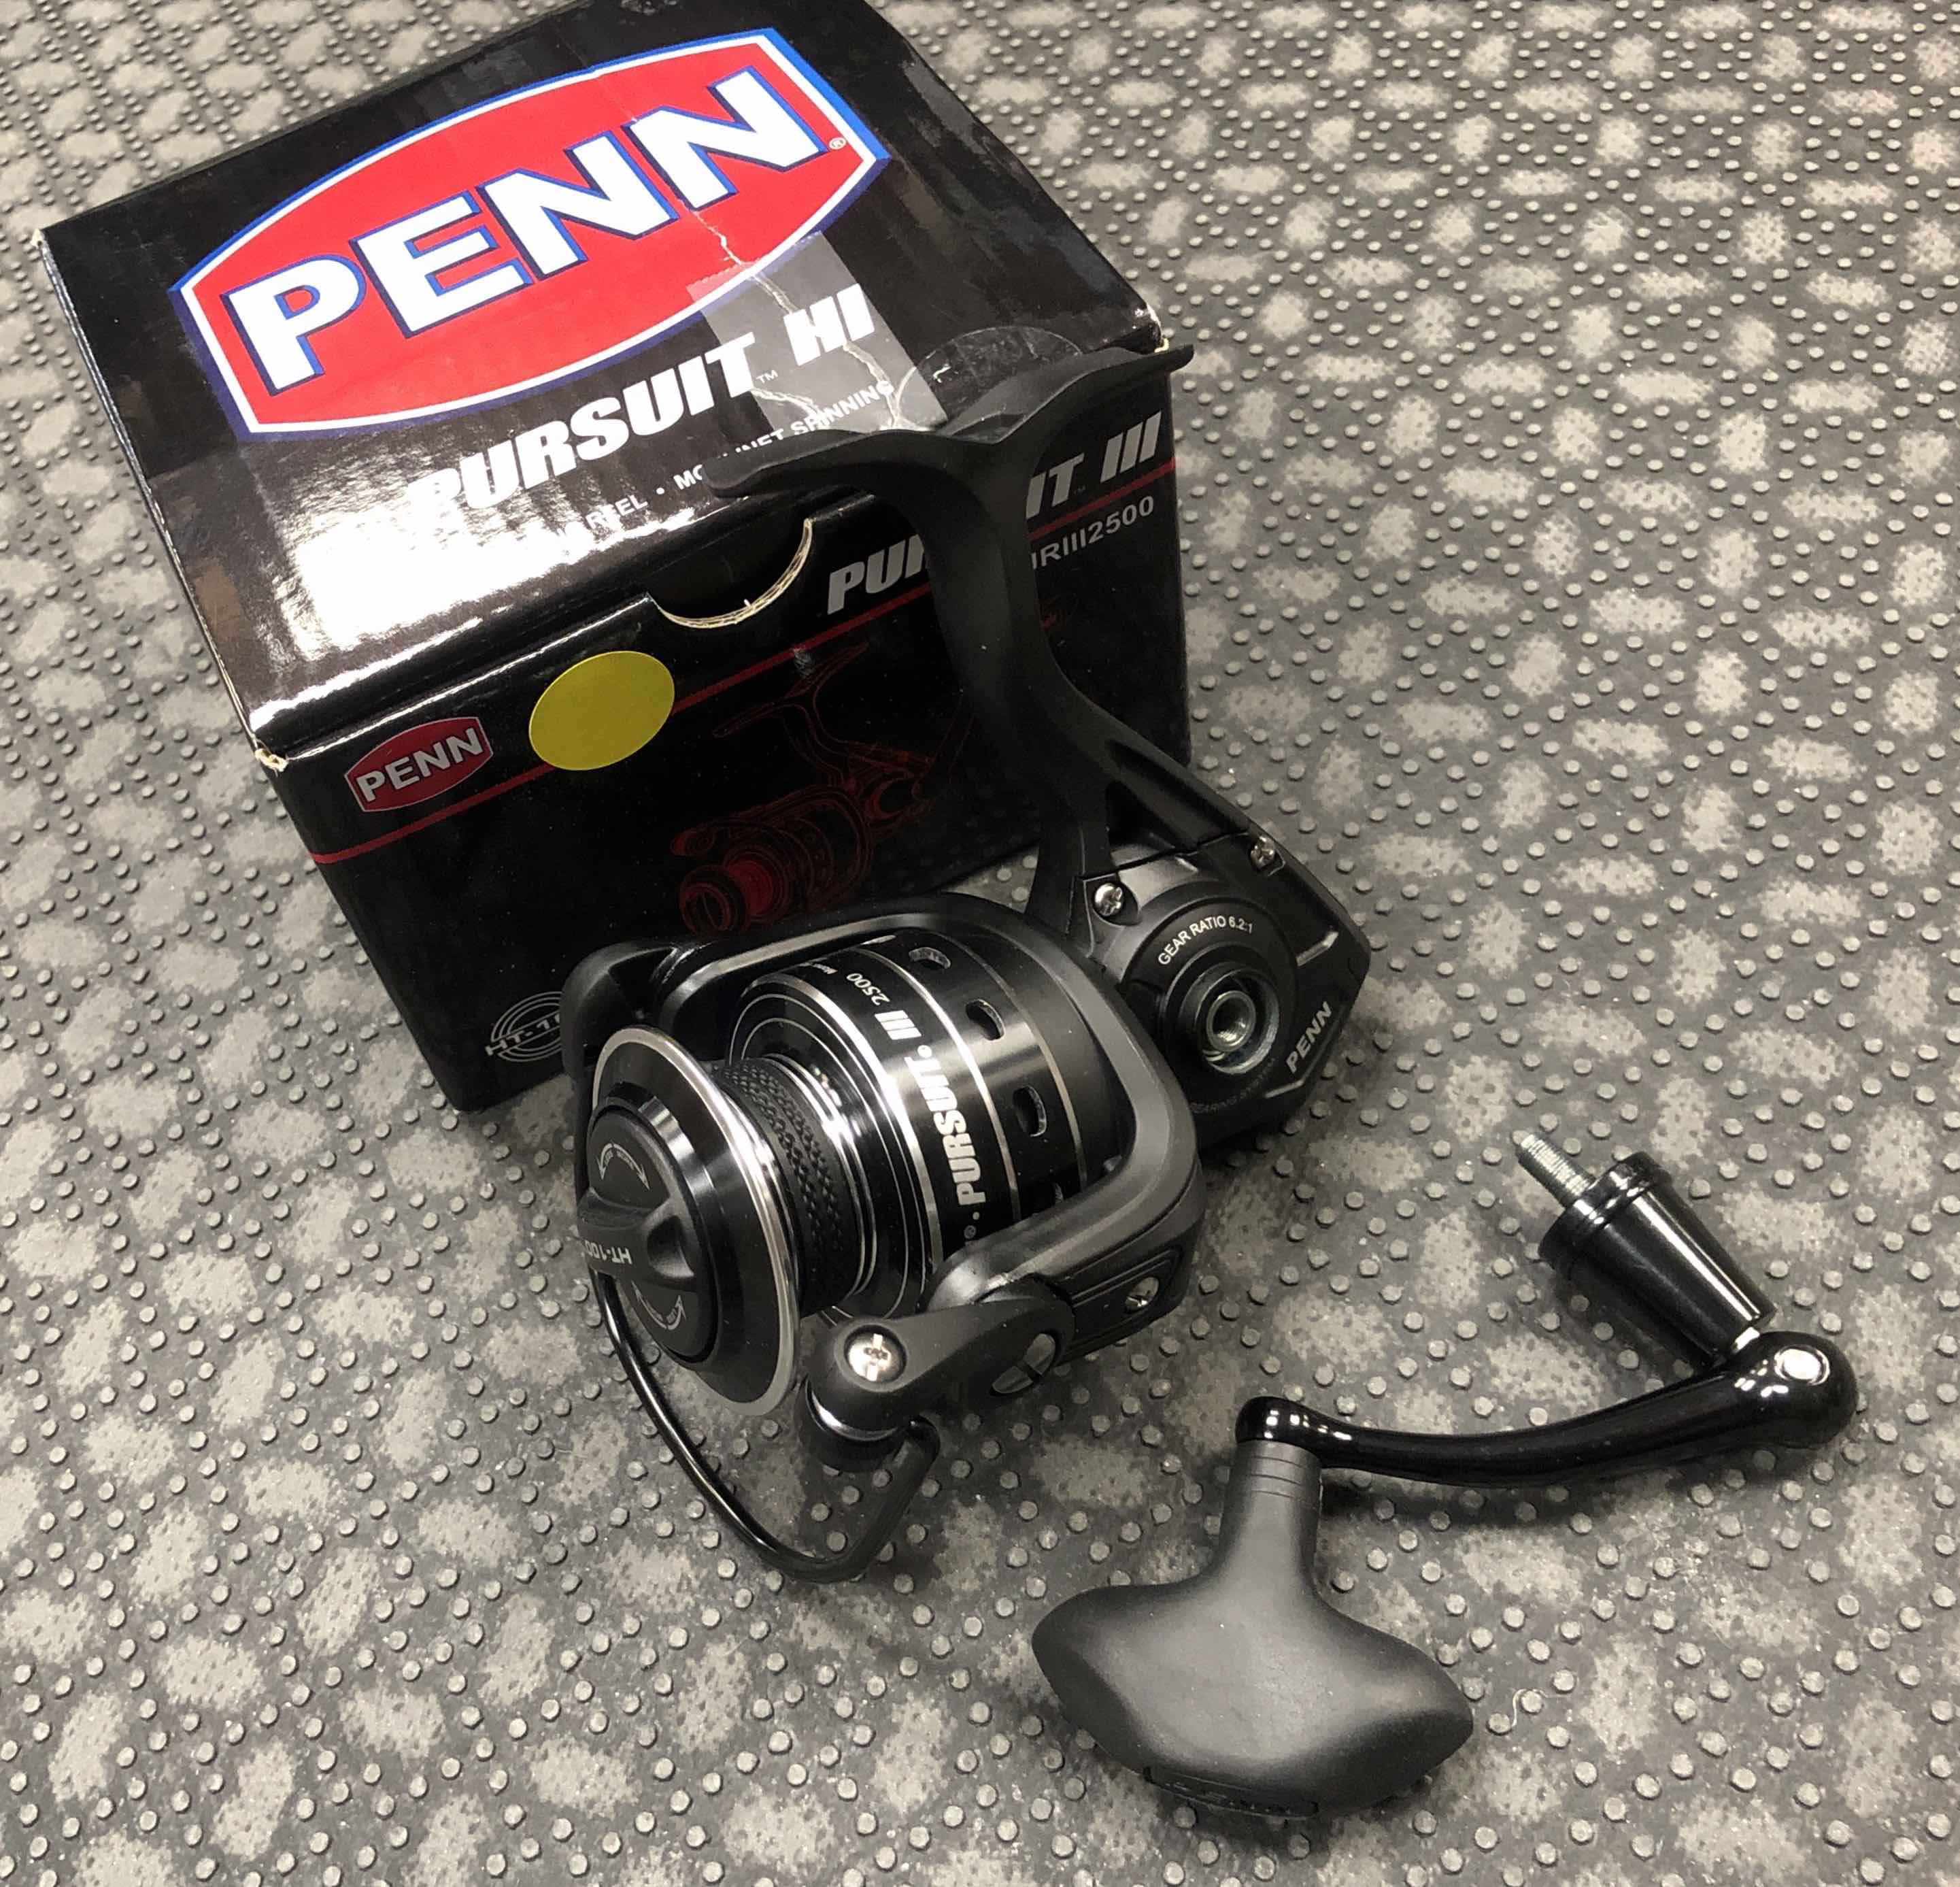 Penn Pursuit III Spinning Reel - GREAT SHAPE! - $40 ( 1 of 2 )